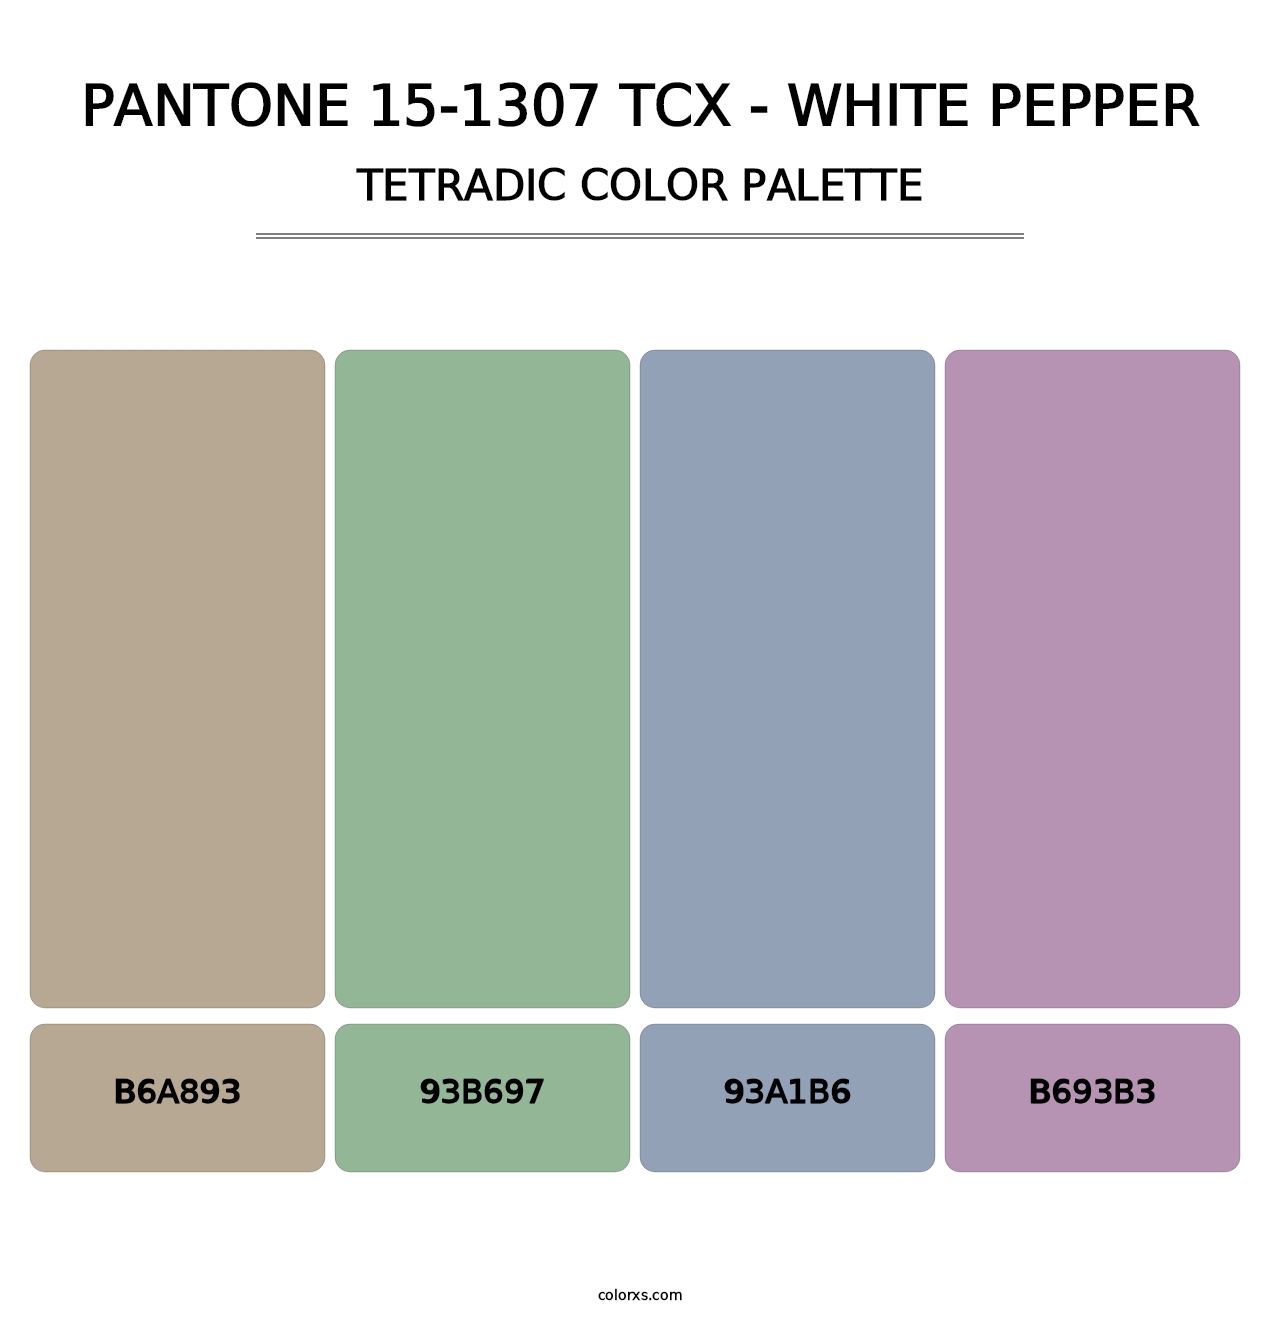 PANTONE 15-1307 TCX - White Pepper - Tetradic Color Palette